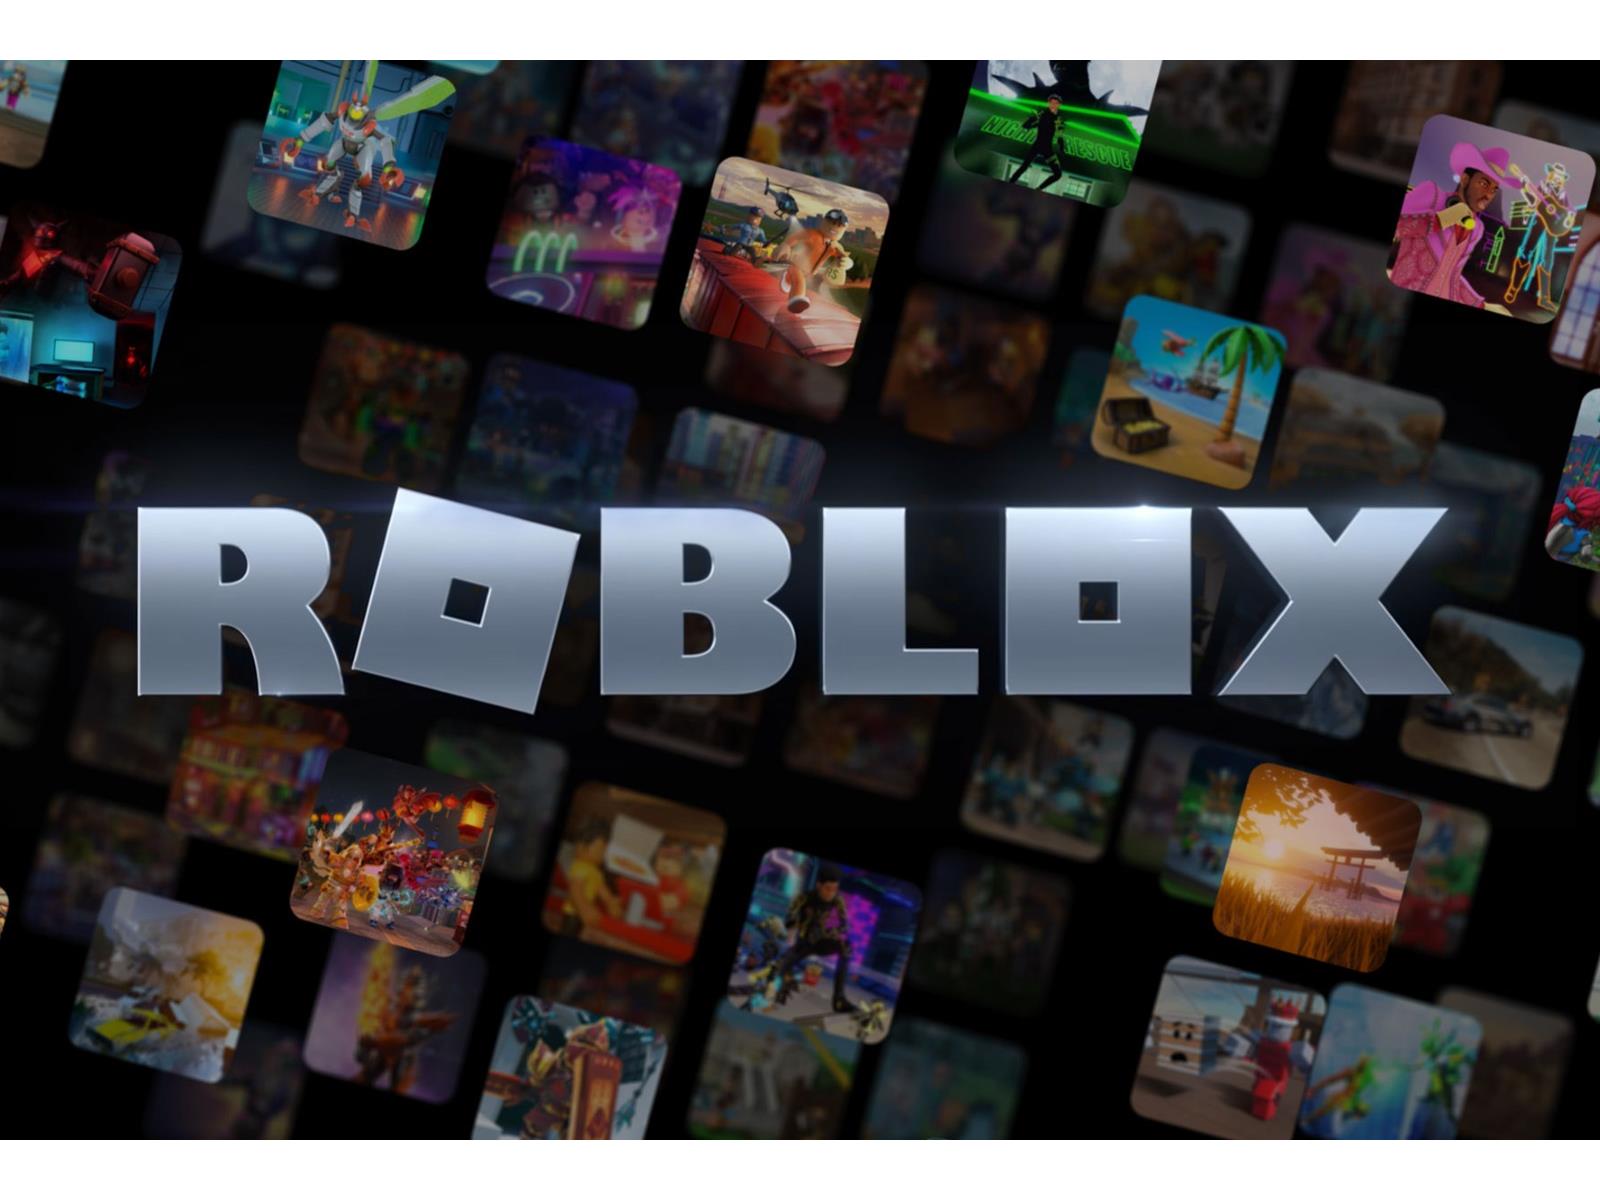 Roblox Servers Crash Hard Sparking Shutdown Rumors But Is A